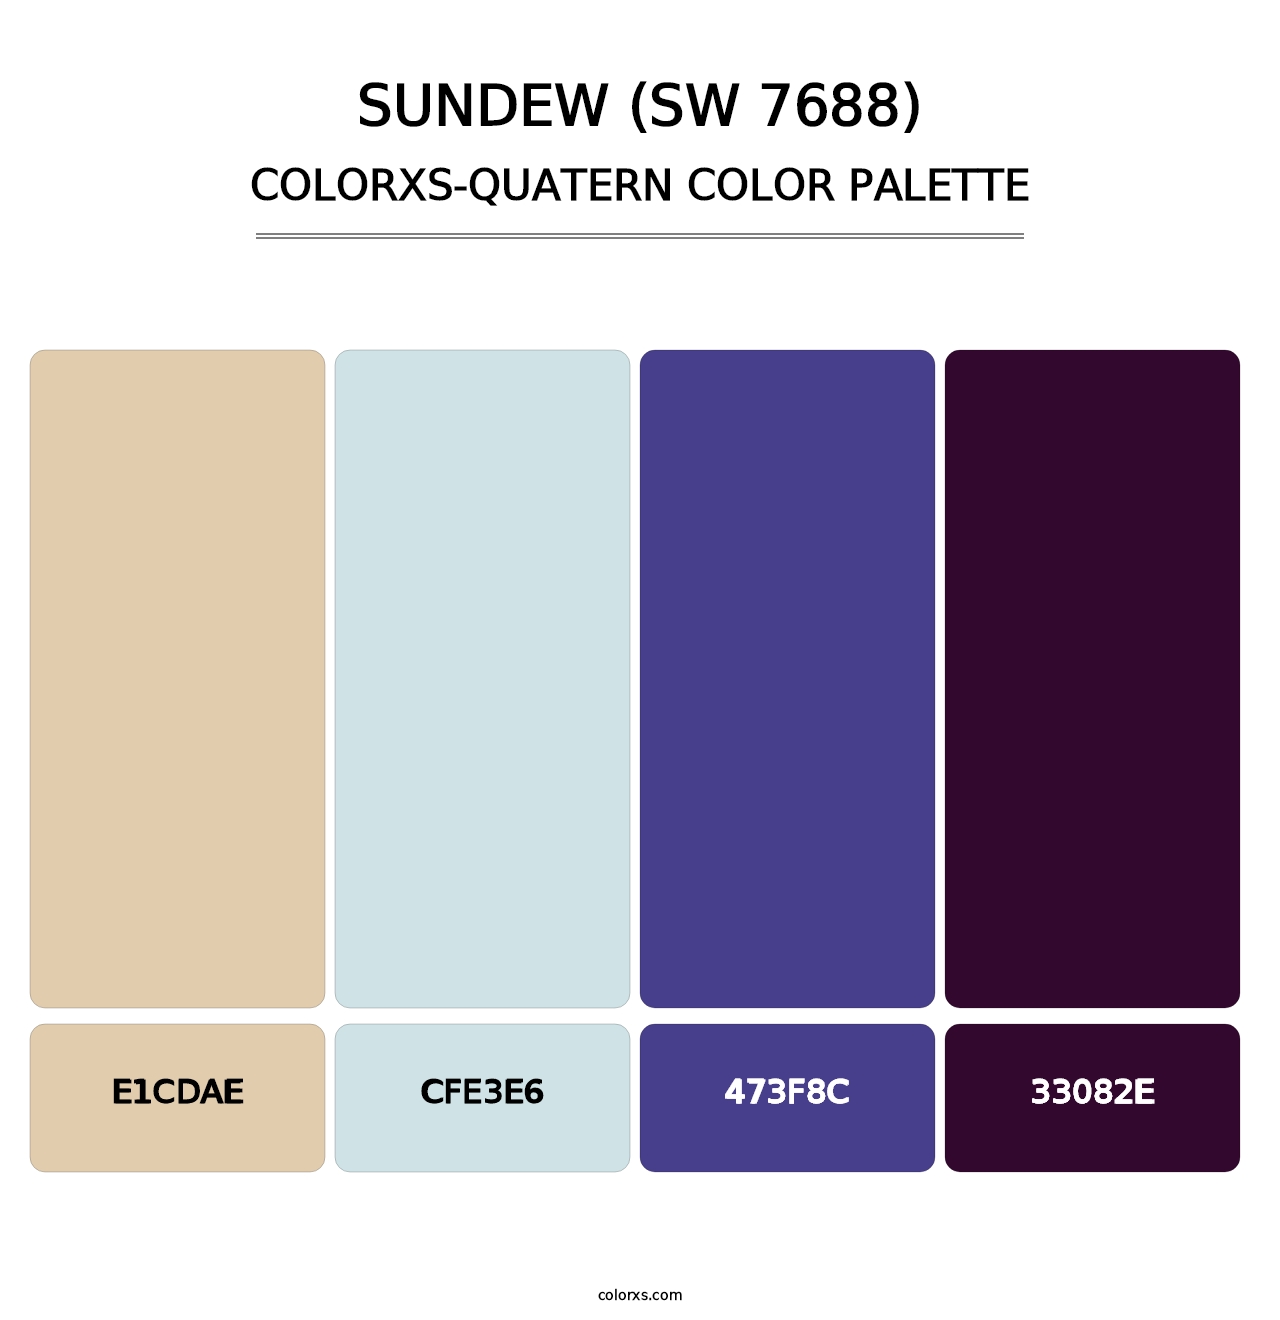 Sundew (SW 7688) - Colorxs Quatern Palette